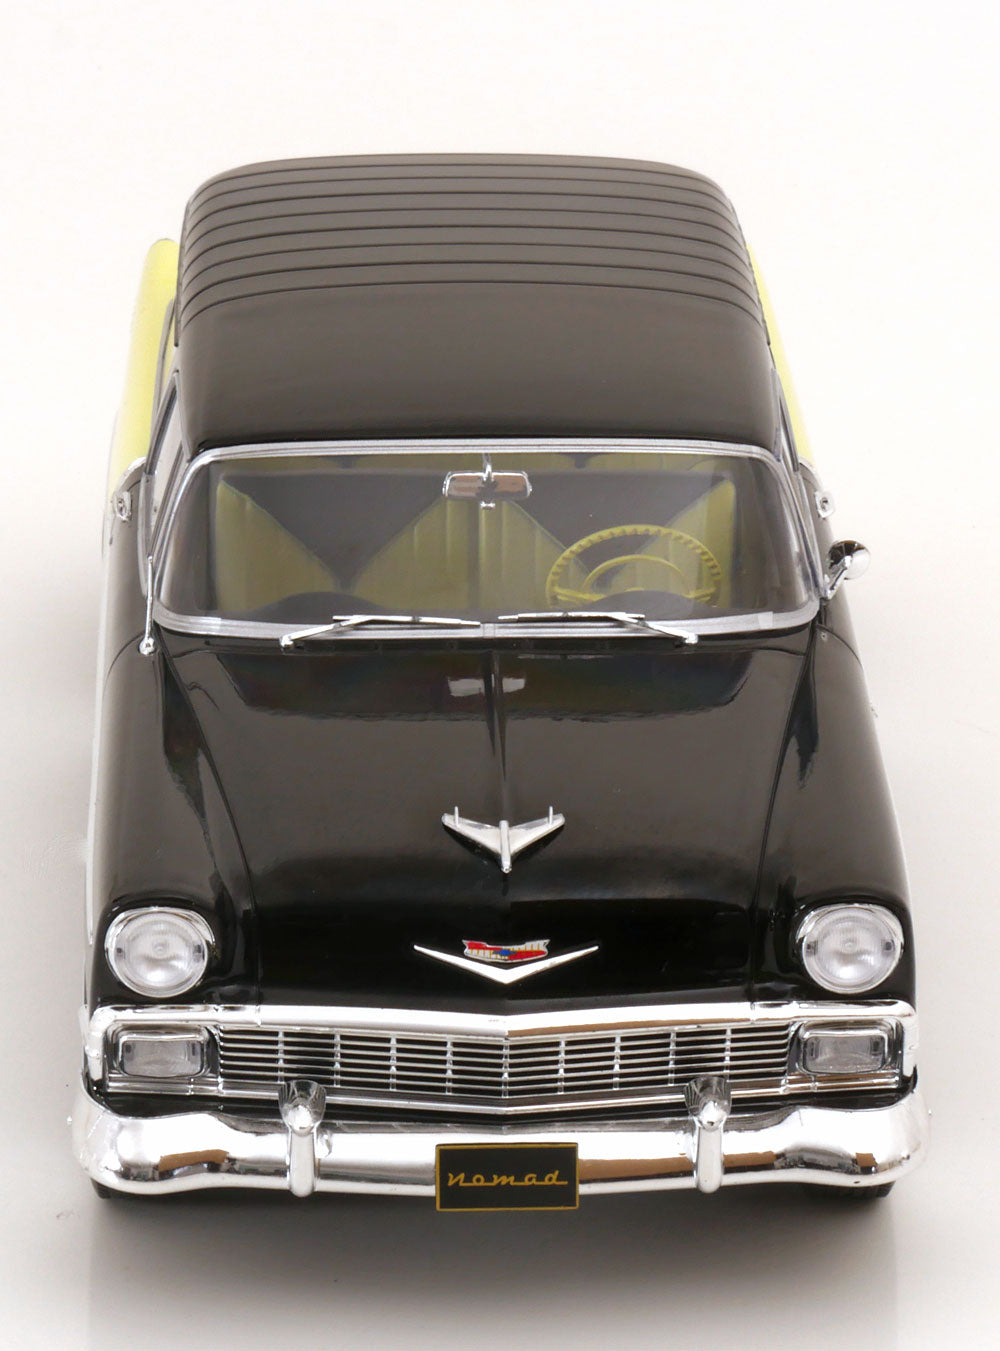 KK Scale 1956 Chevrolet Bel Air Nomad Custom Black and Light Yellow 1:18